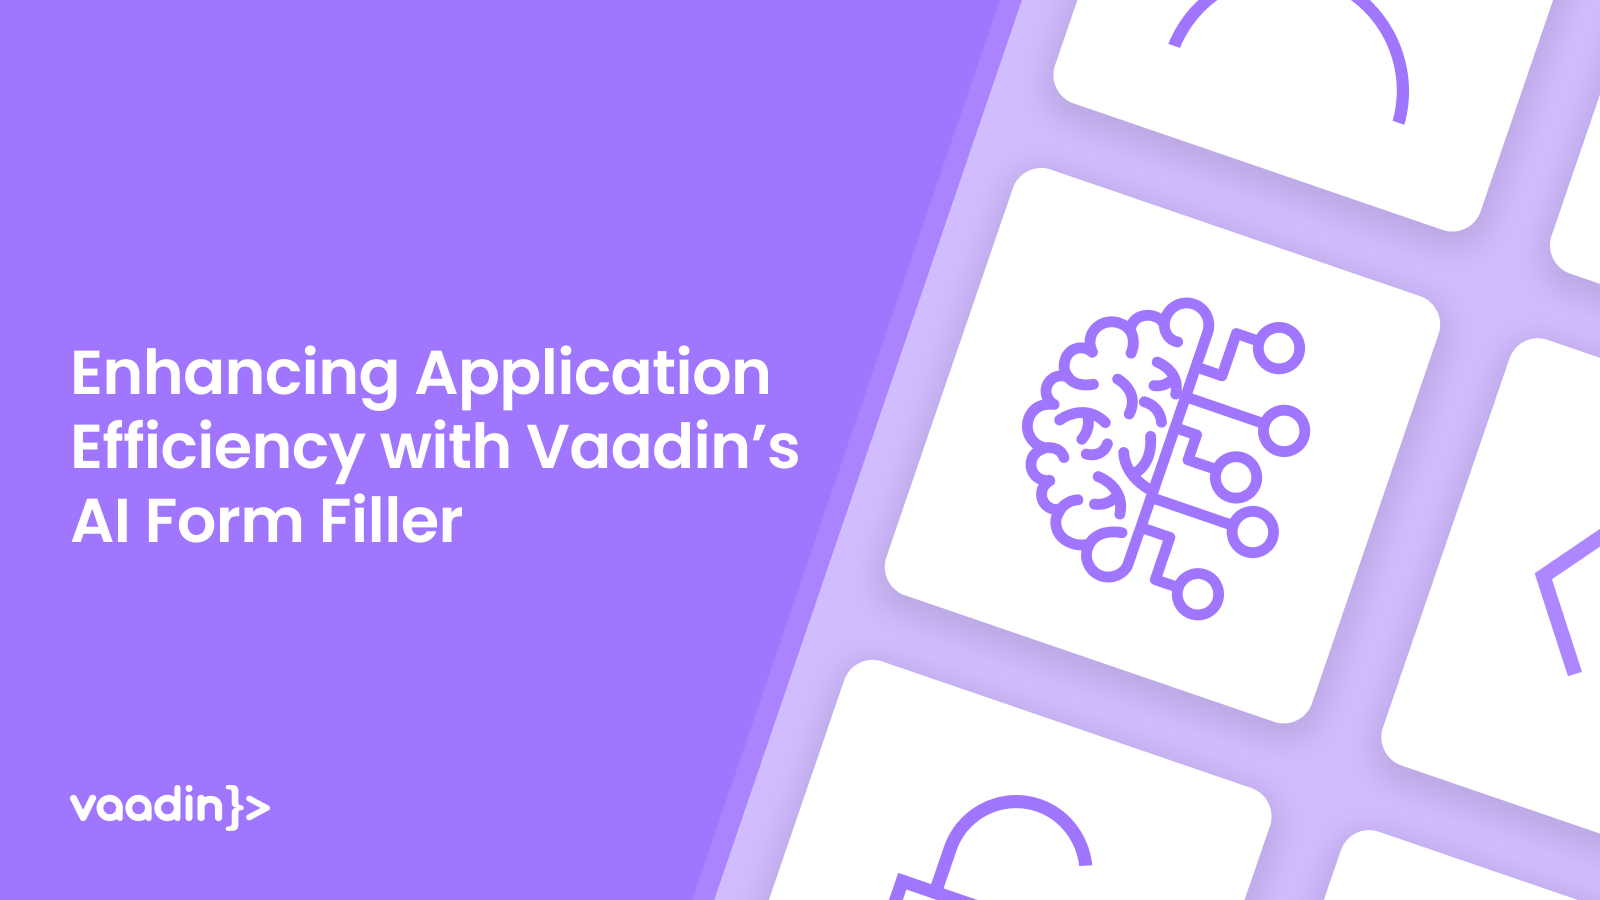 Enhance Application Efficiency with Vaadin's Form Filler